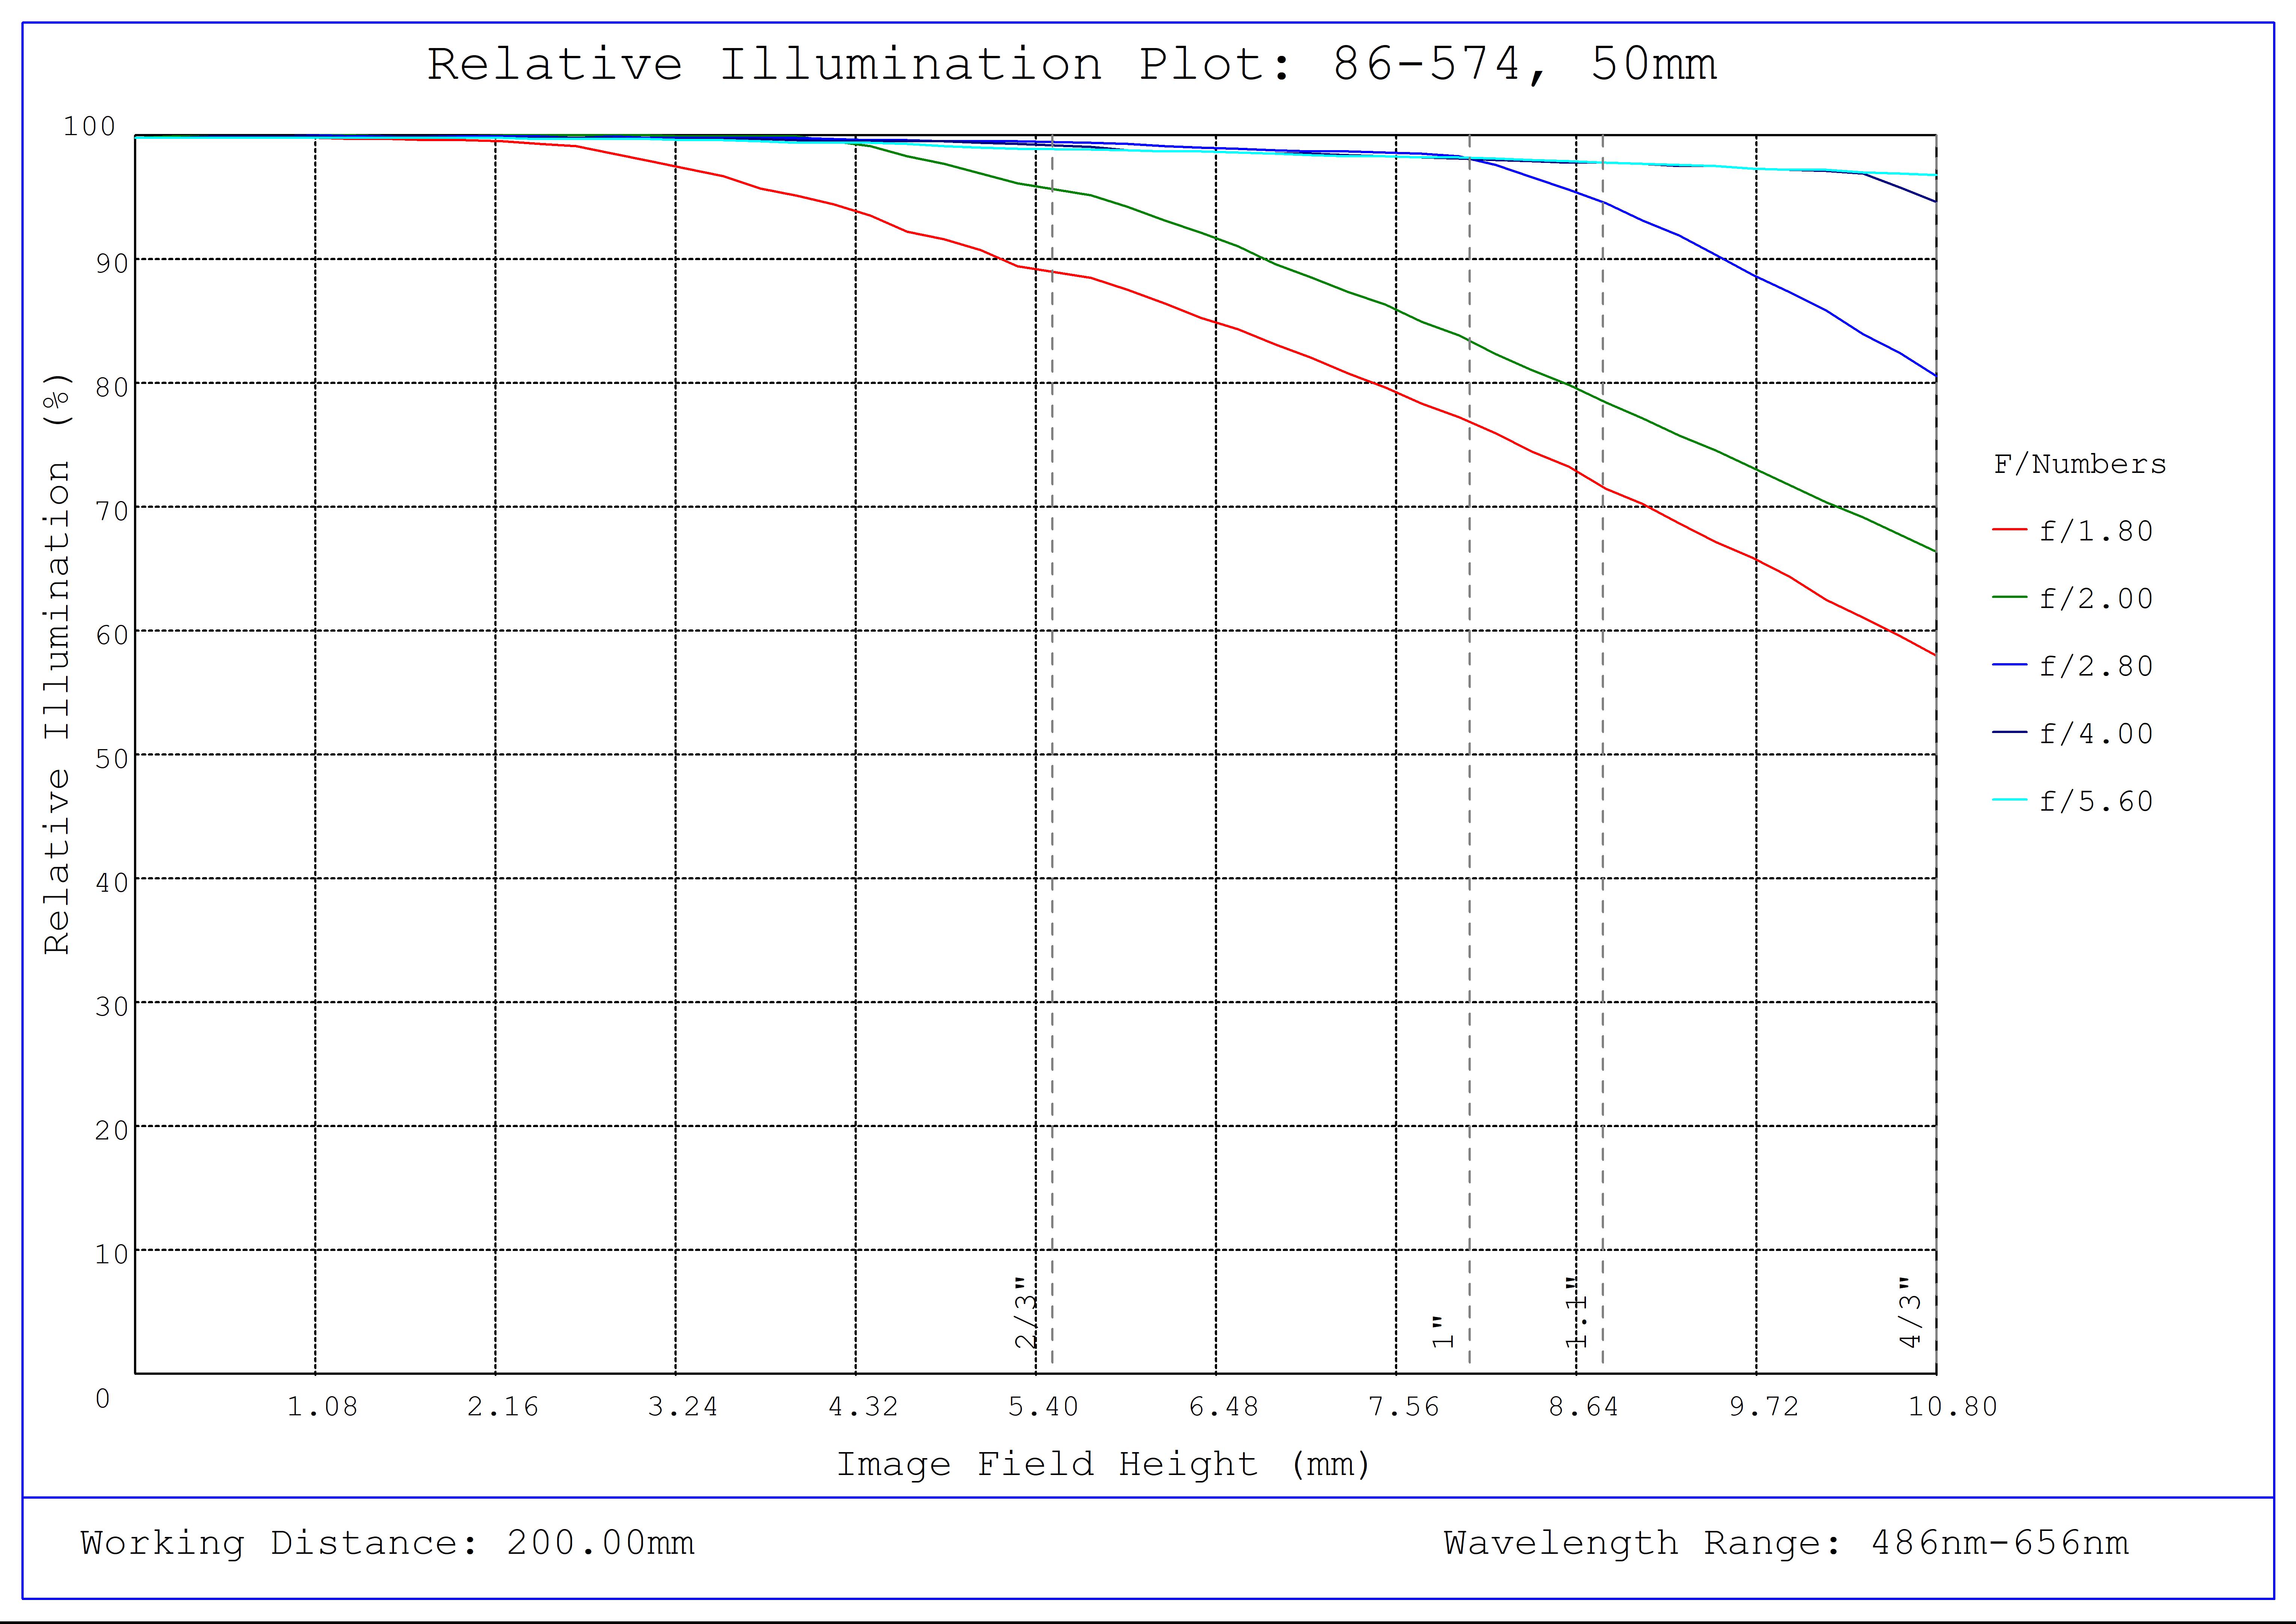 #86-574, 50mm Focal Length, HP Series Fixed Focal Length Lens, Relative Illumination Plot